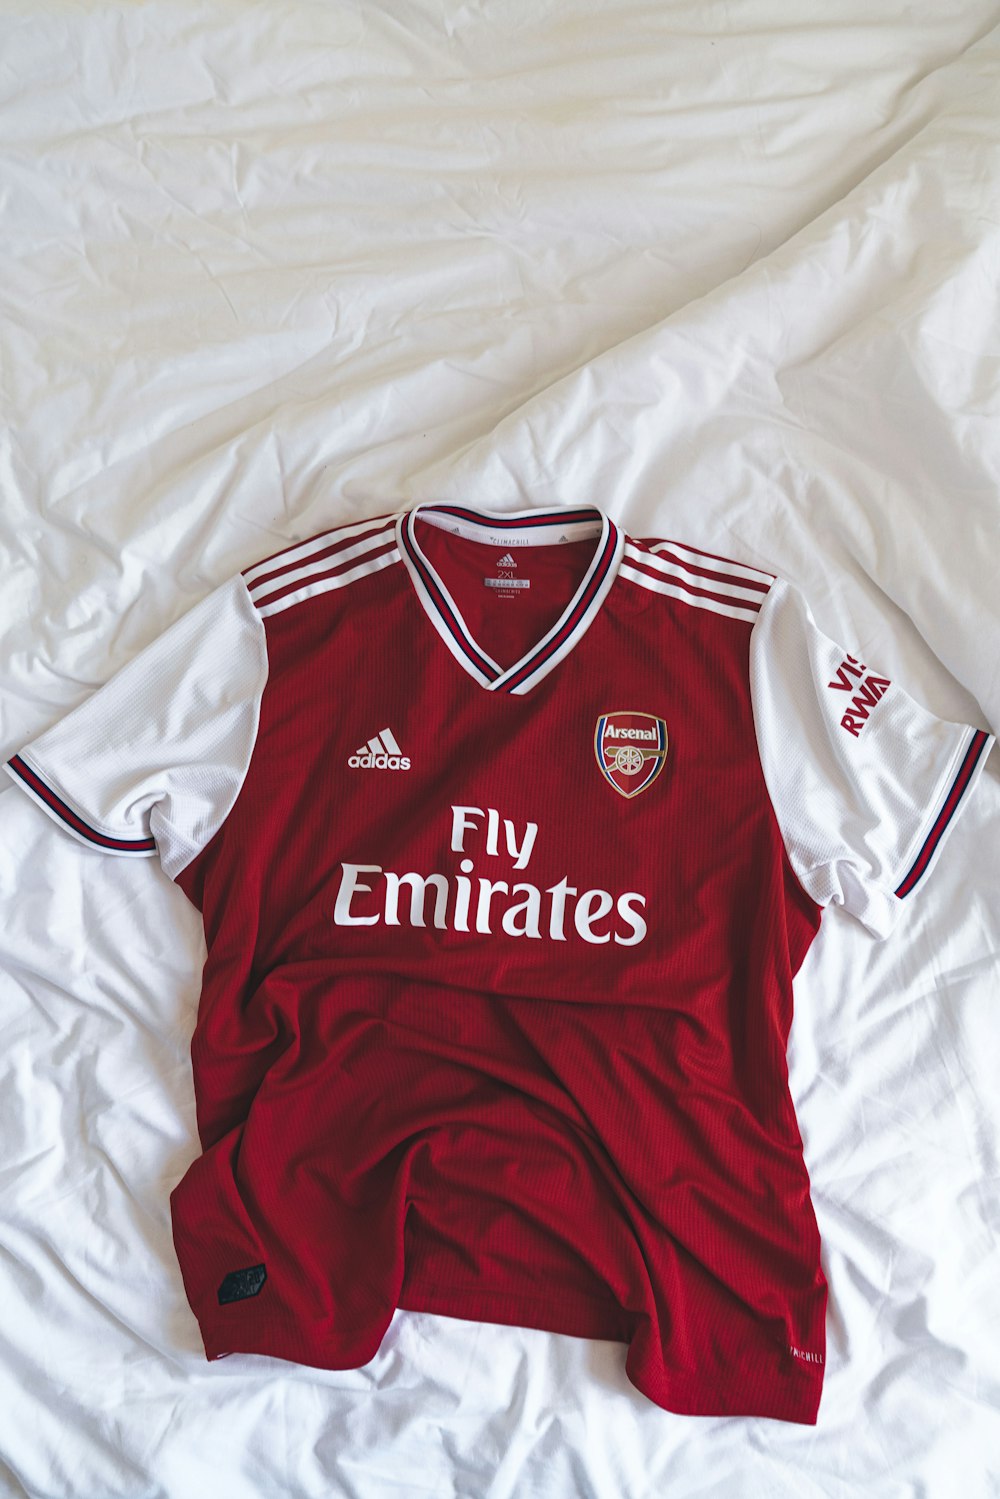 red and white Adidas Fly Emirates shirt photo – Free Soccer jersey Image on  Unsplash